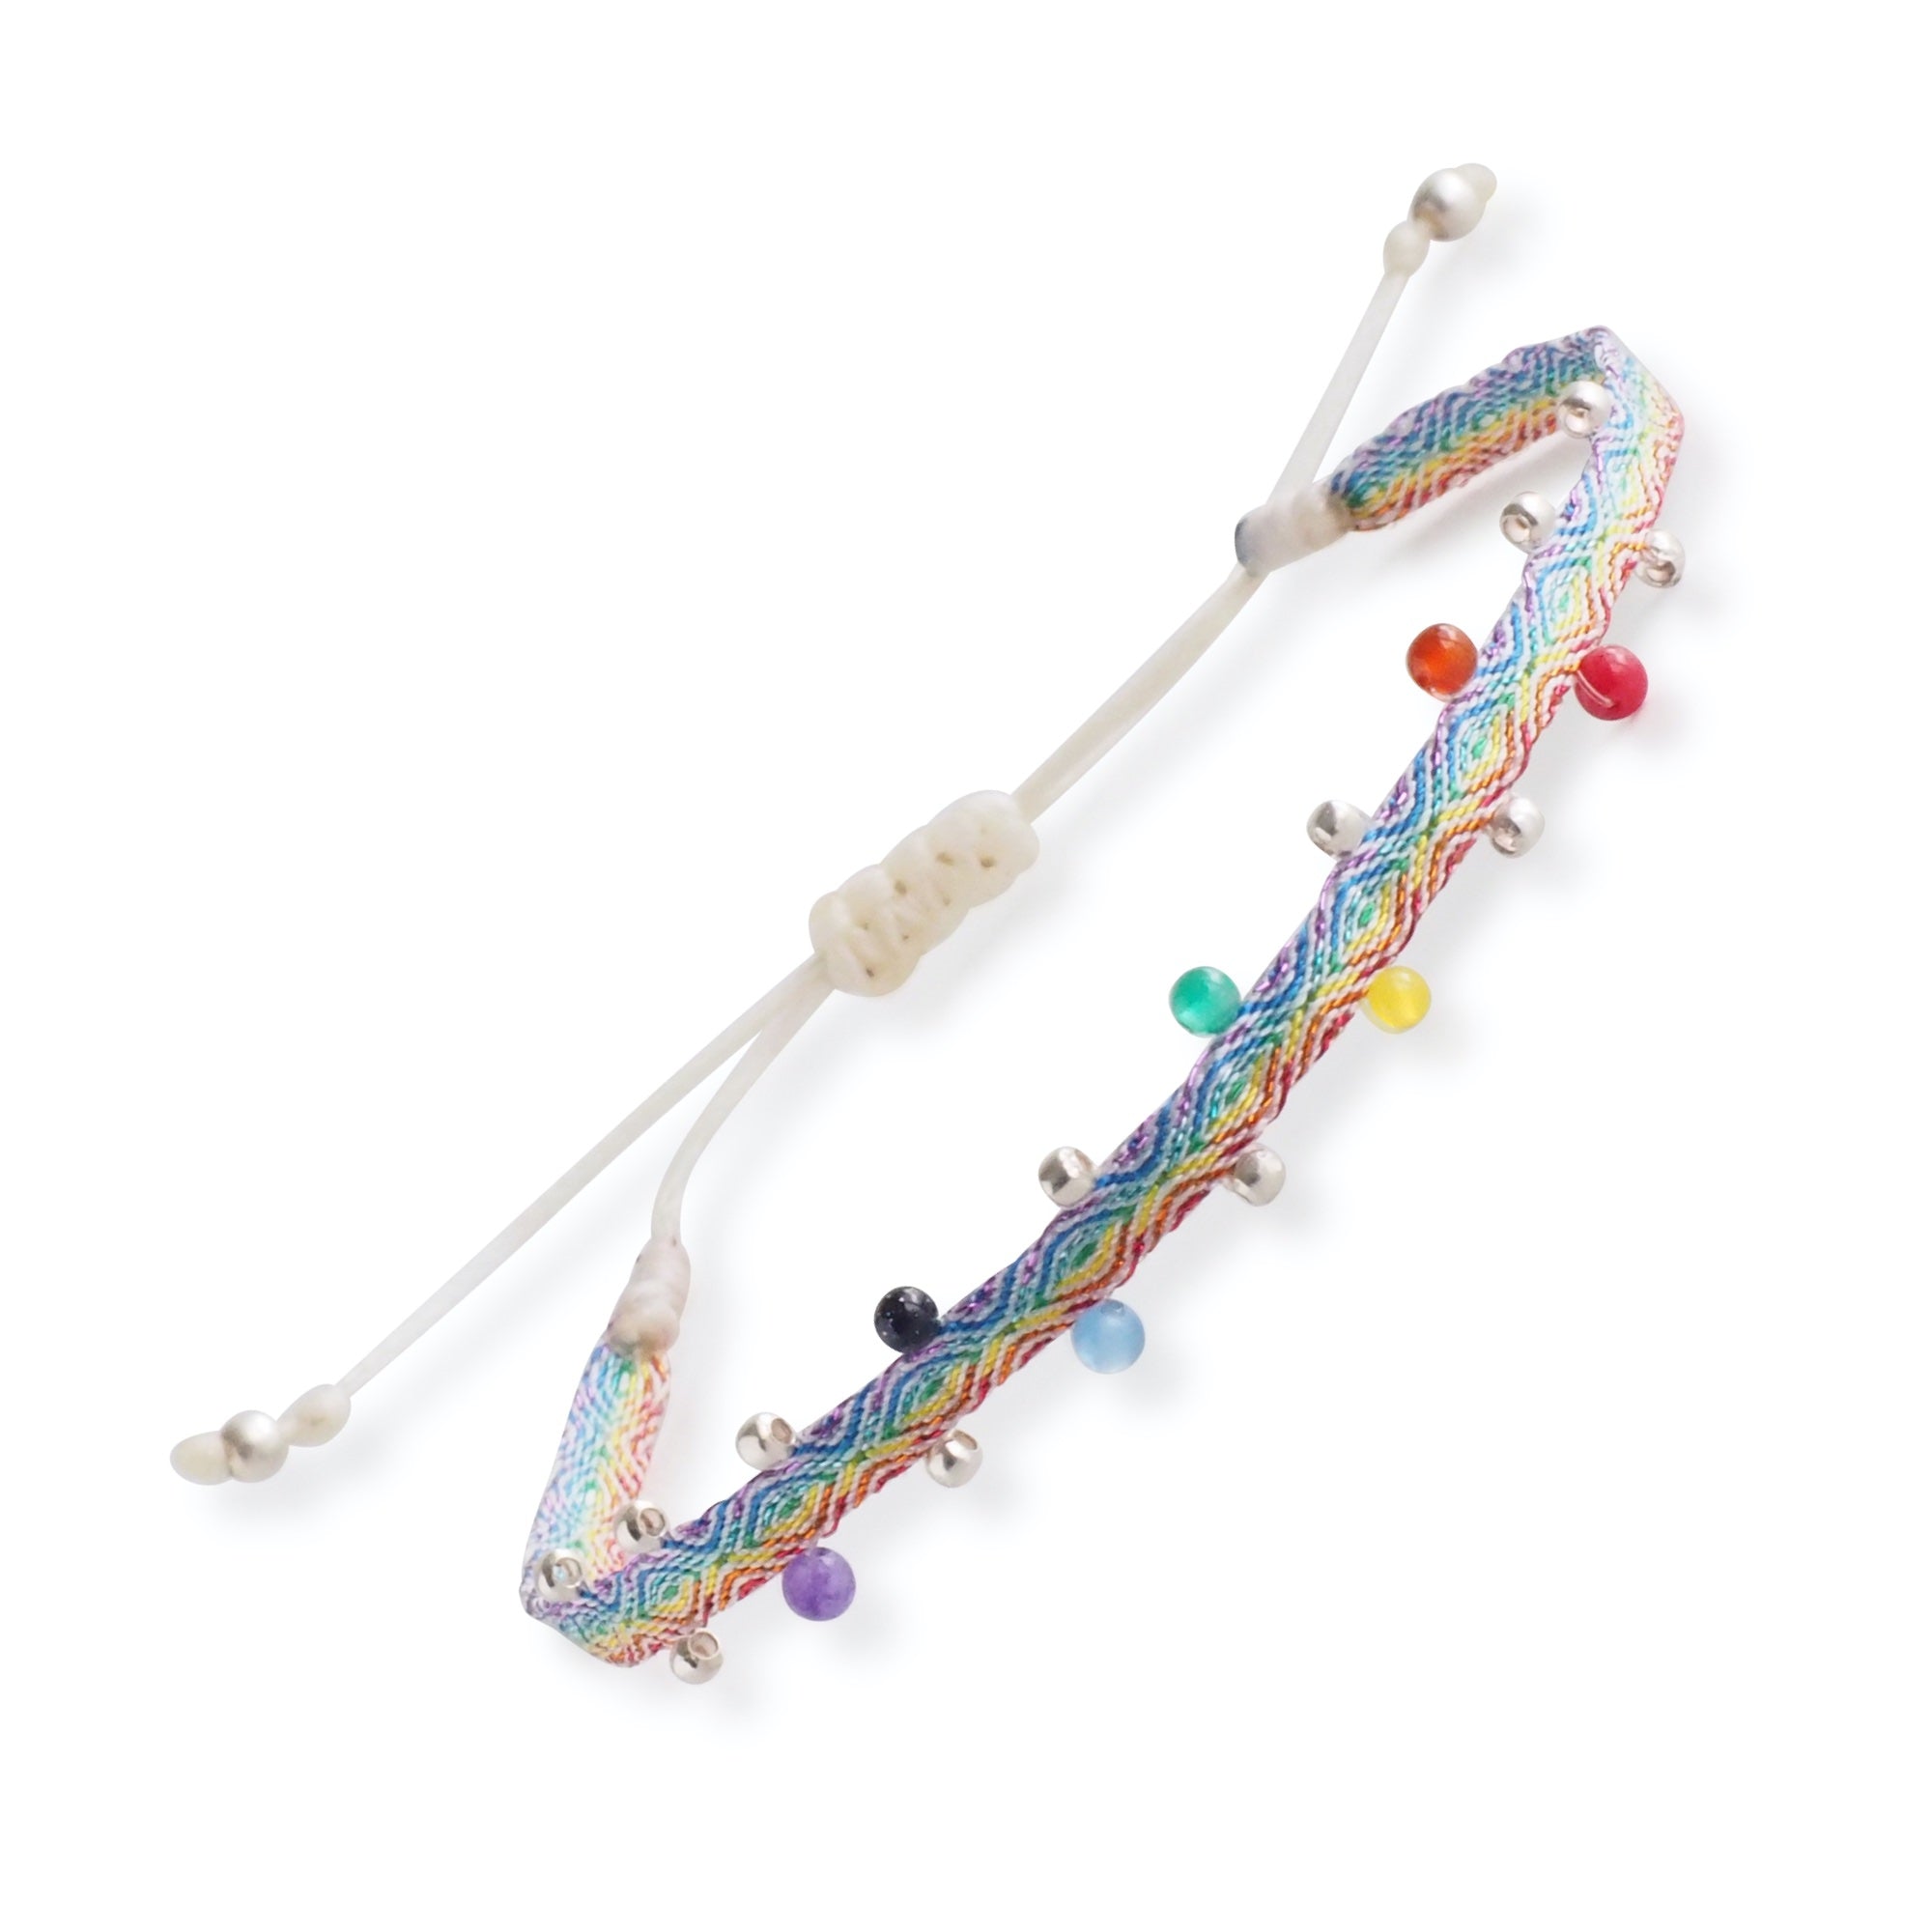 Egyptian Loom Bracelet 7 Chakras Bracelet, with lateral sterling silver beads and gemstones, 40 threads bracelet